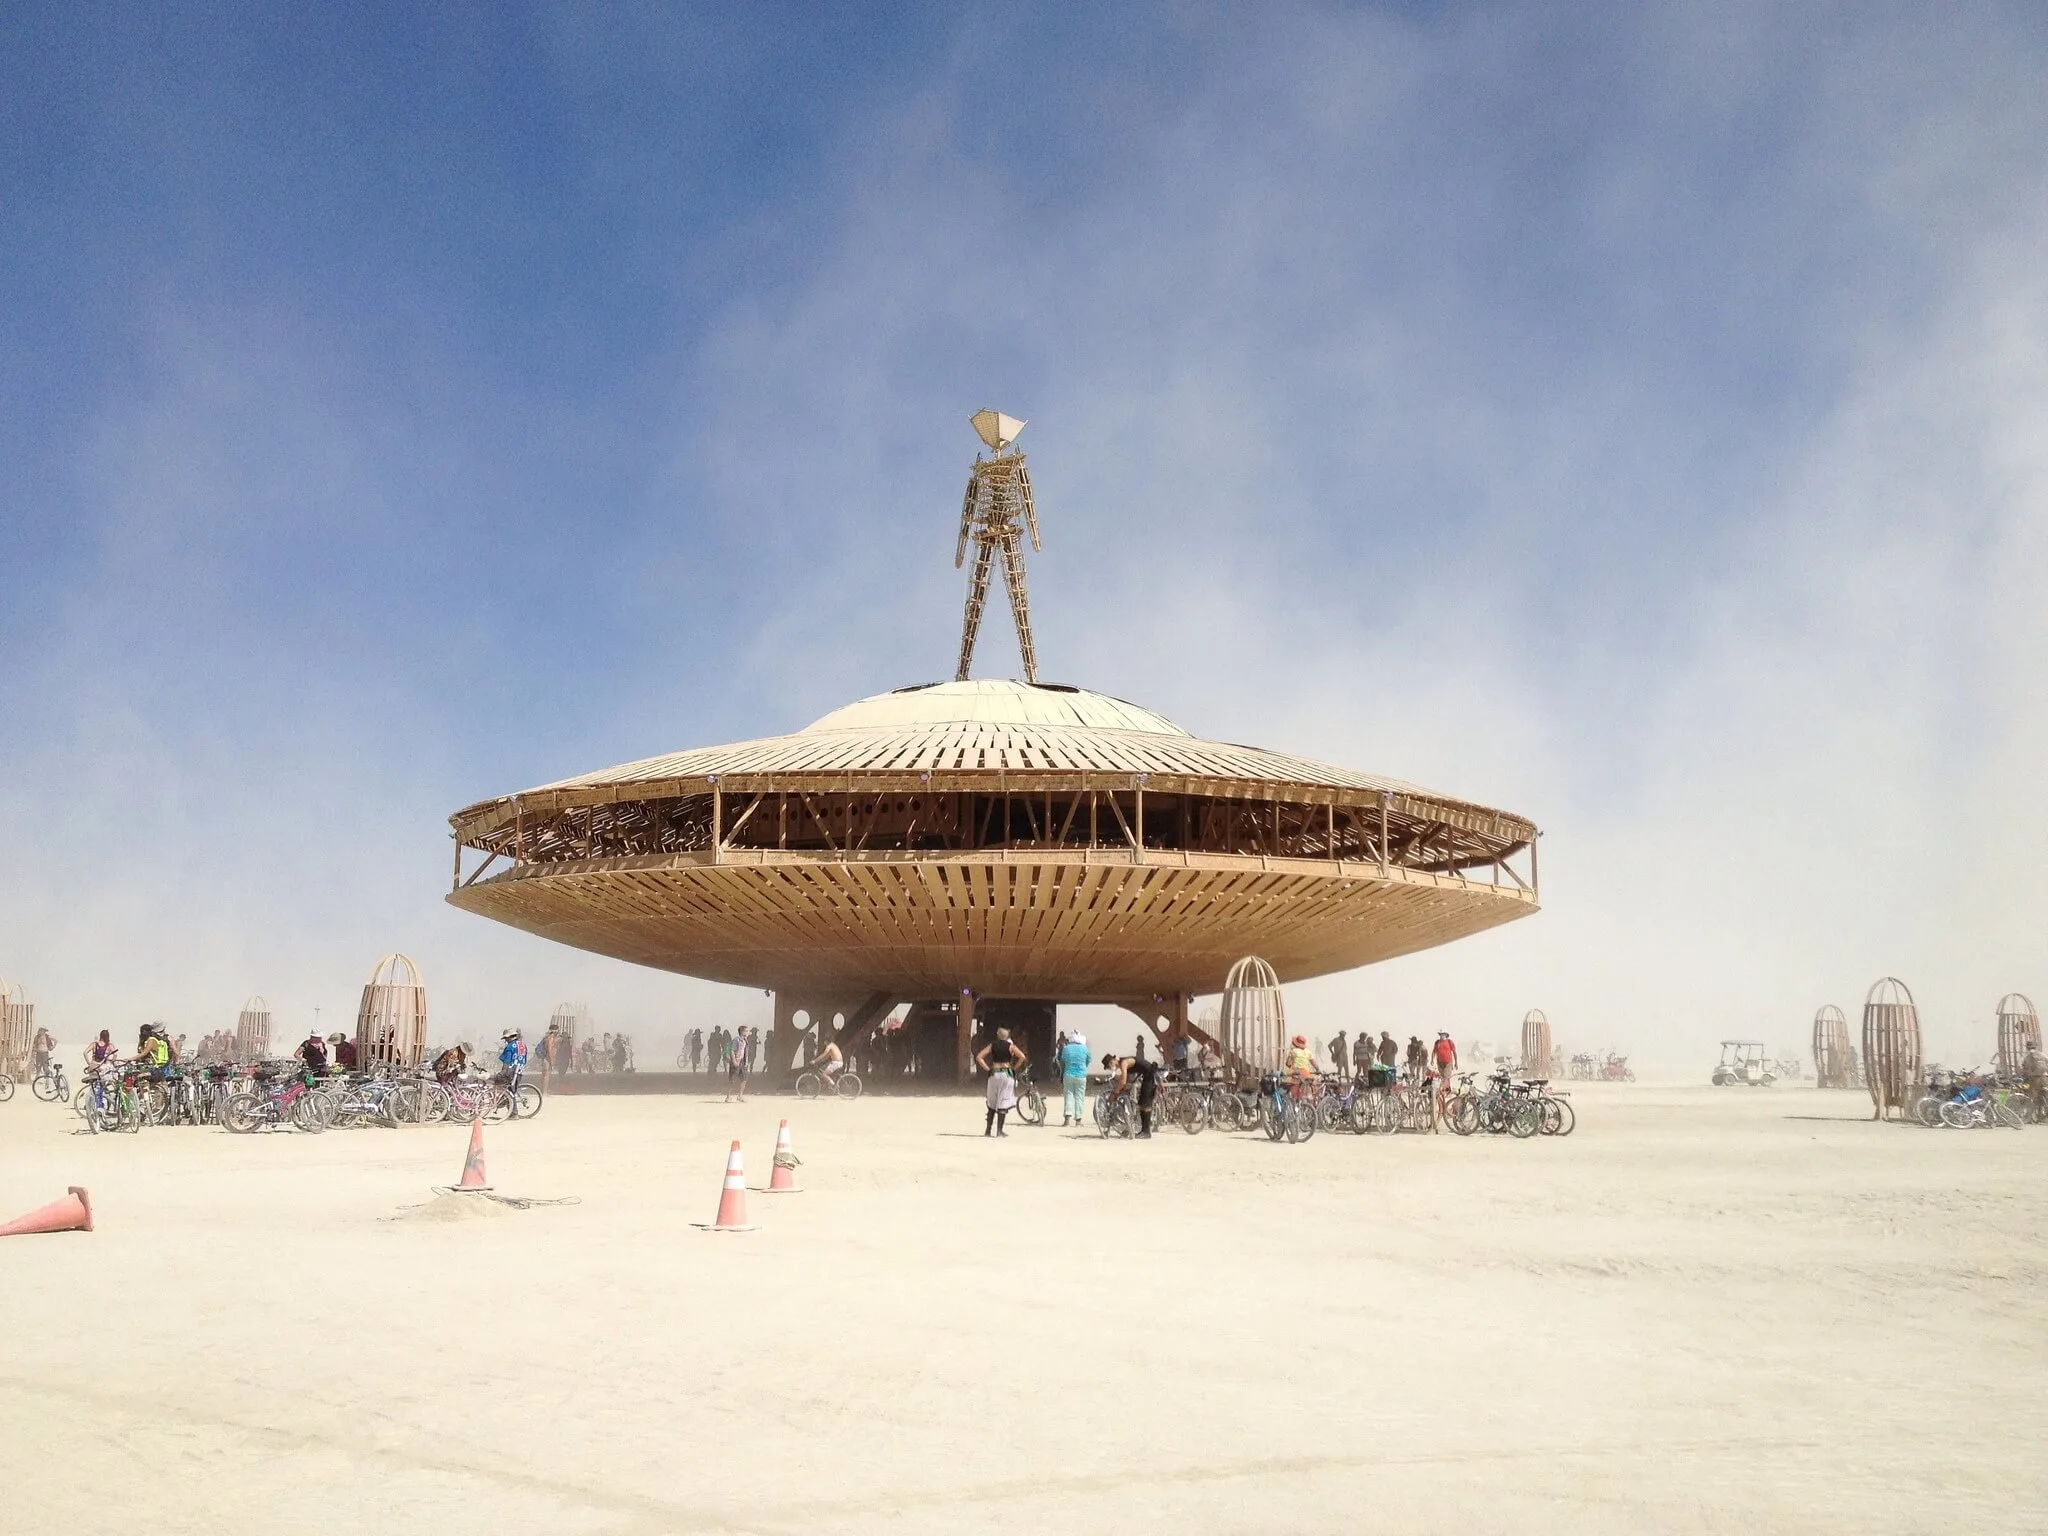 Spaceship art installation Burning Man